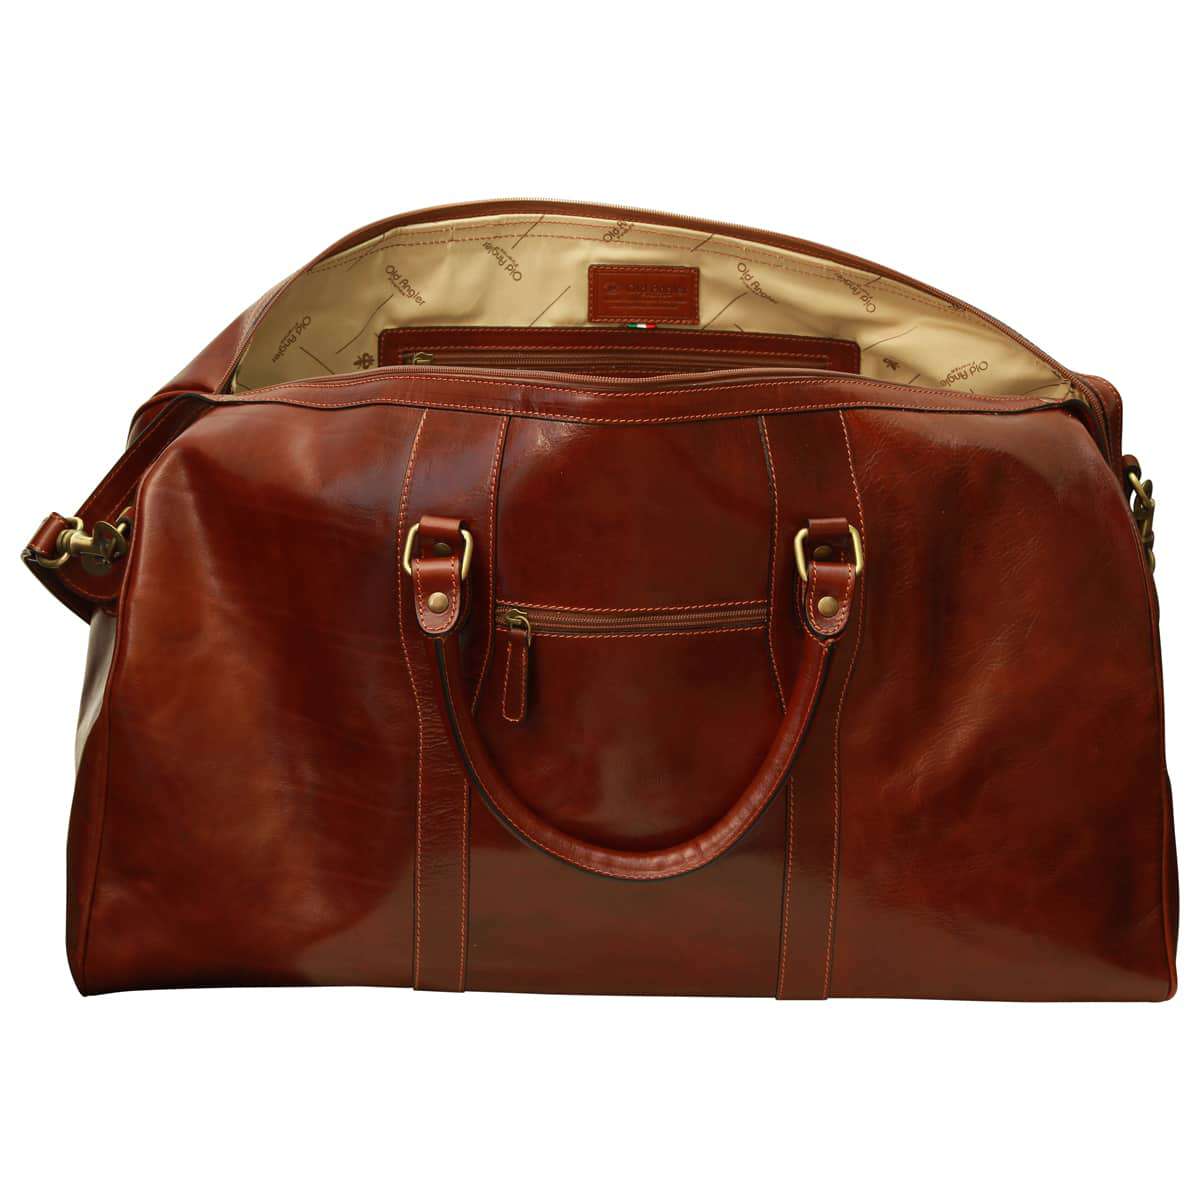 Weekend travel bag - Brown | 107405MA US | Old Angler Firenze